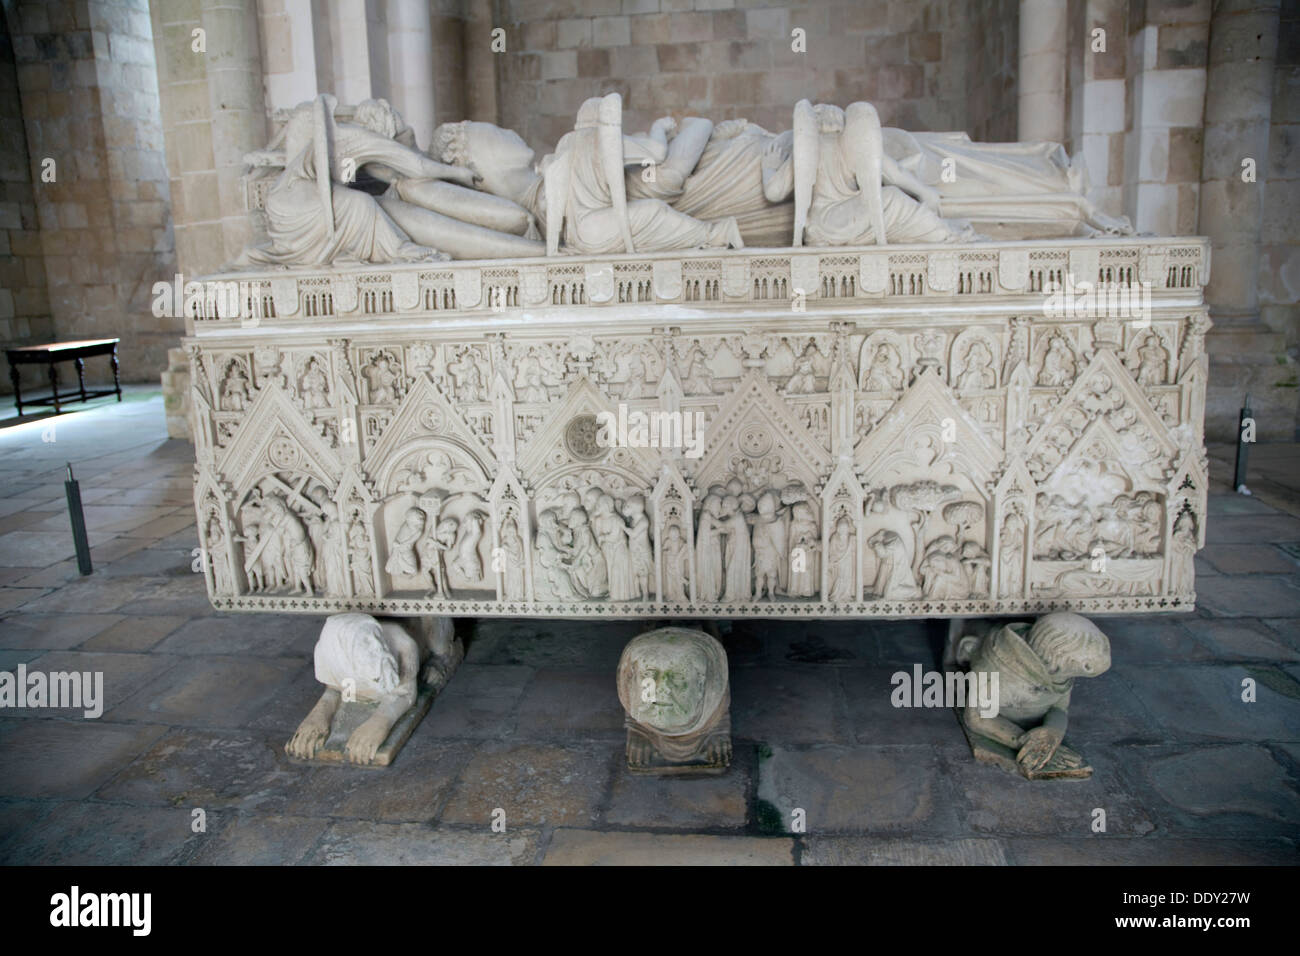 Sarcophagus of Ines de Castro, Monastery of Alcobaca, Alcobaca, Portugal, 2009.  Artist: Samuel Magal Stock Photo